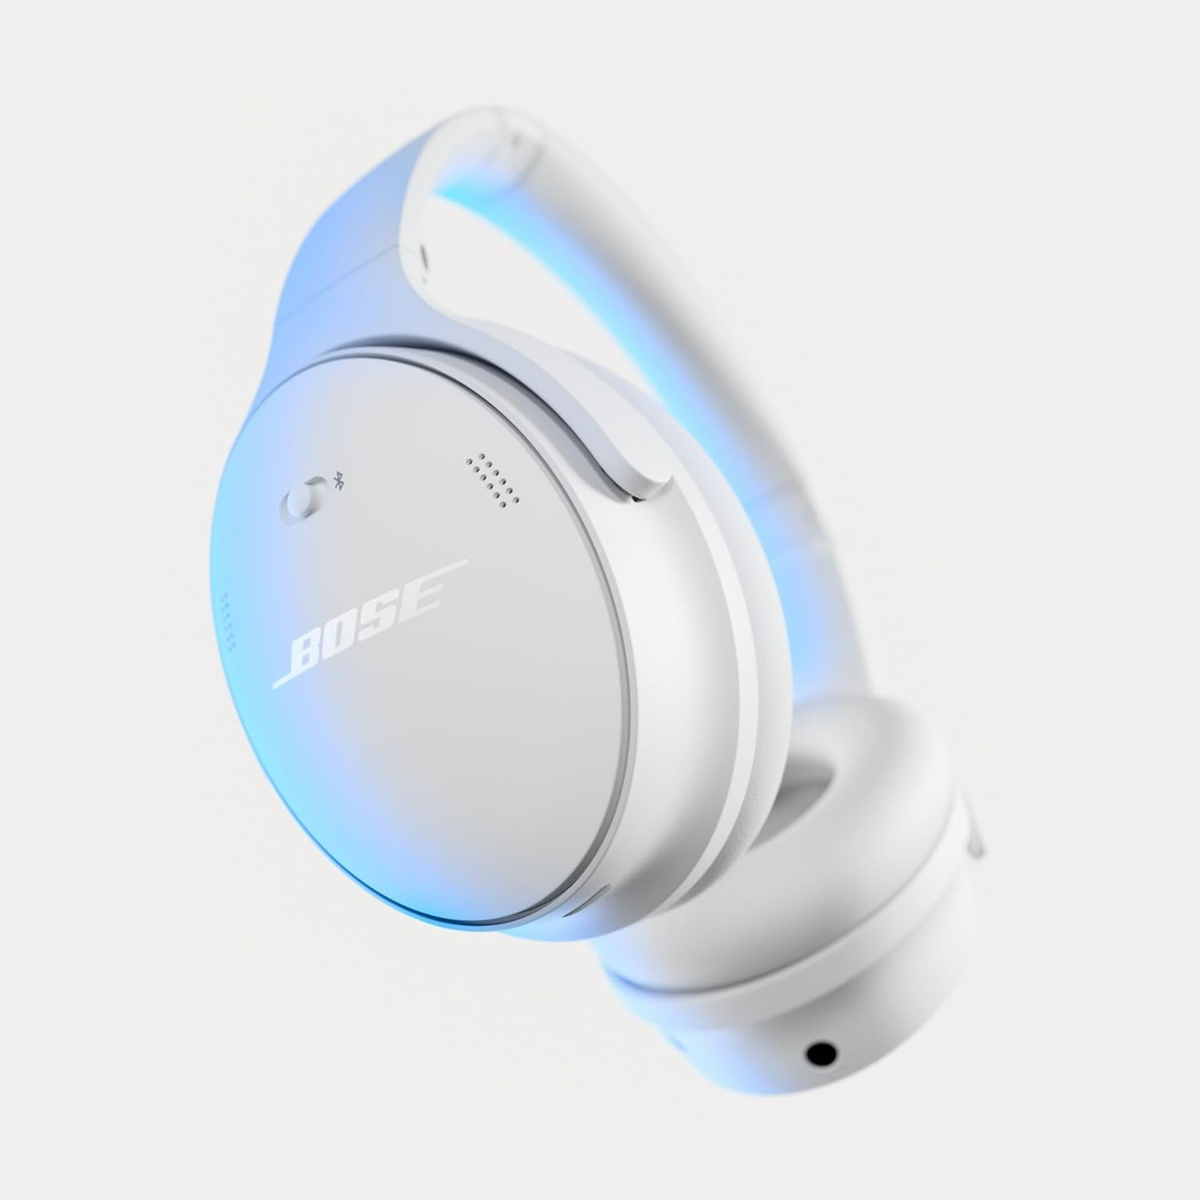 Bose QuietComfort Wireless Noise Cancelling Headphones, White